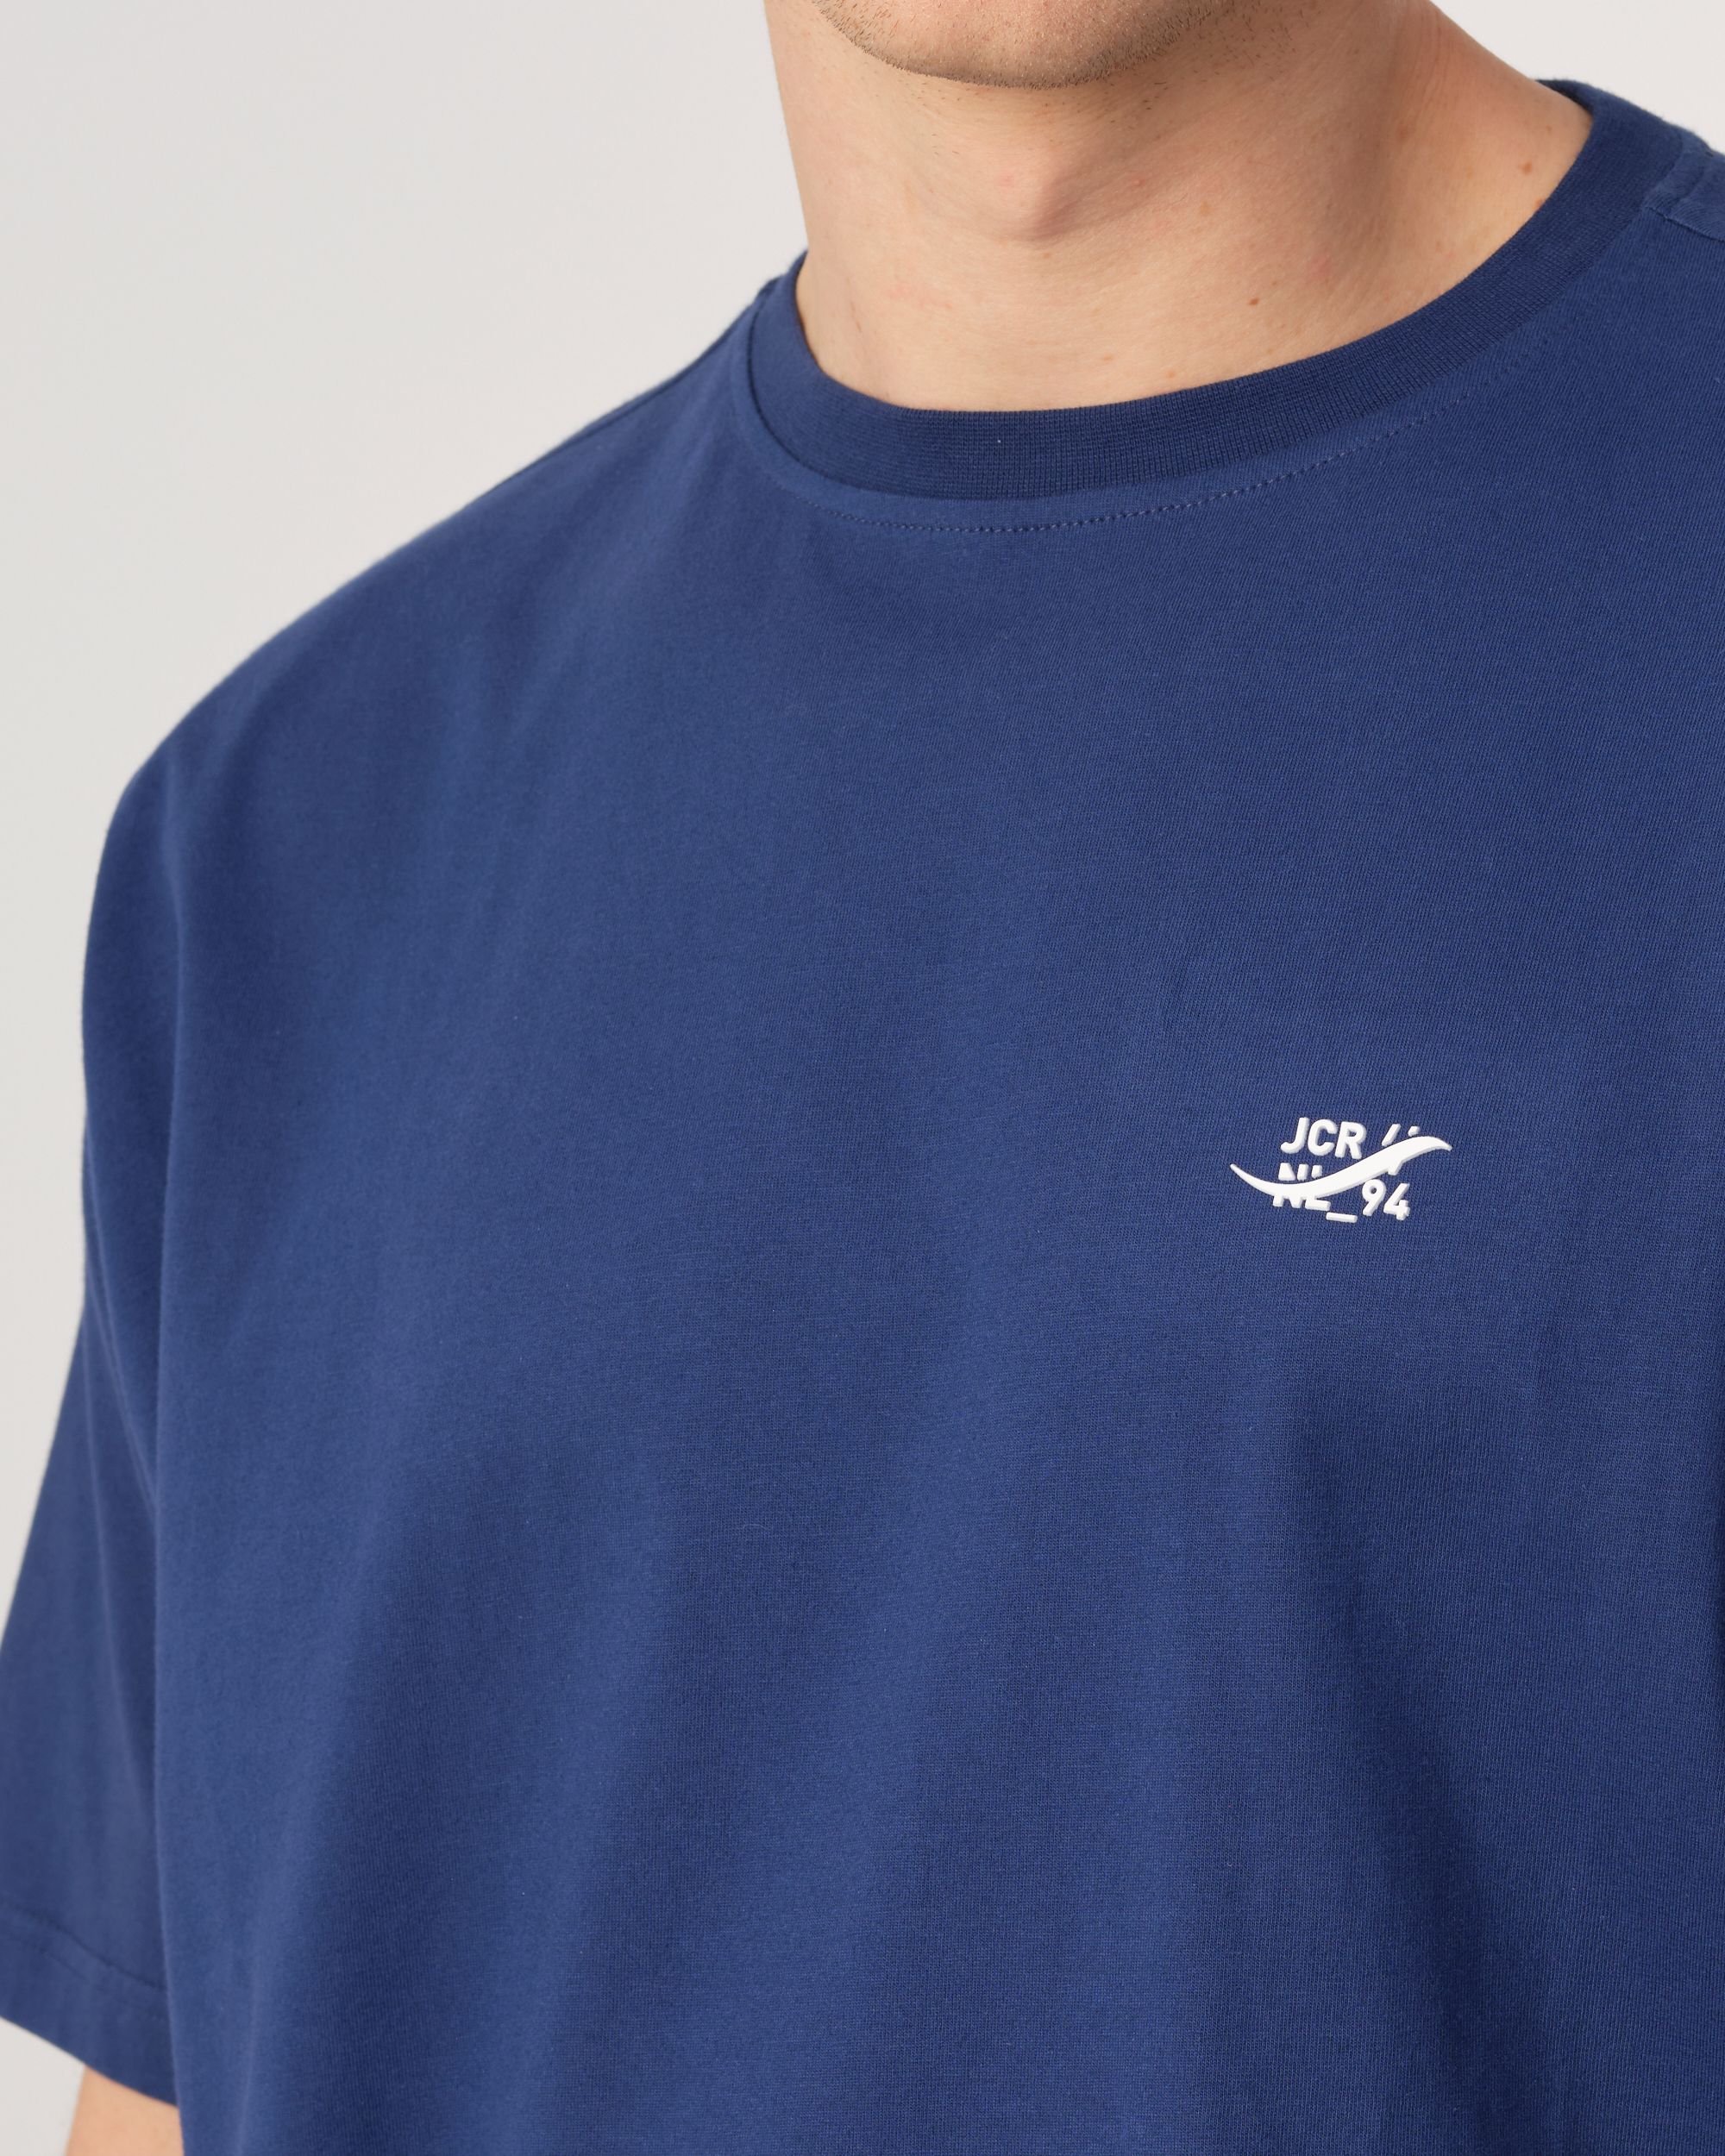 J.C. RAGS Thomas T-shirt KM Blue Depths 089173-001-L